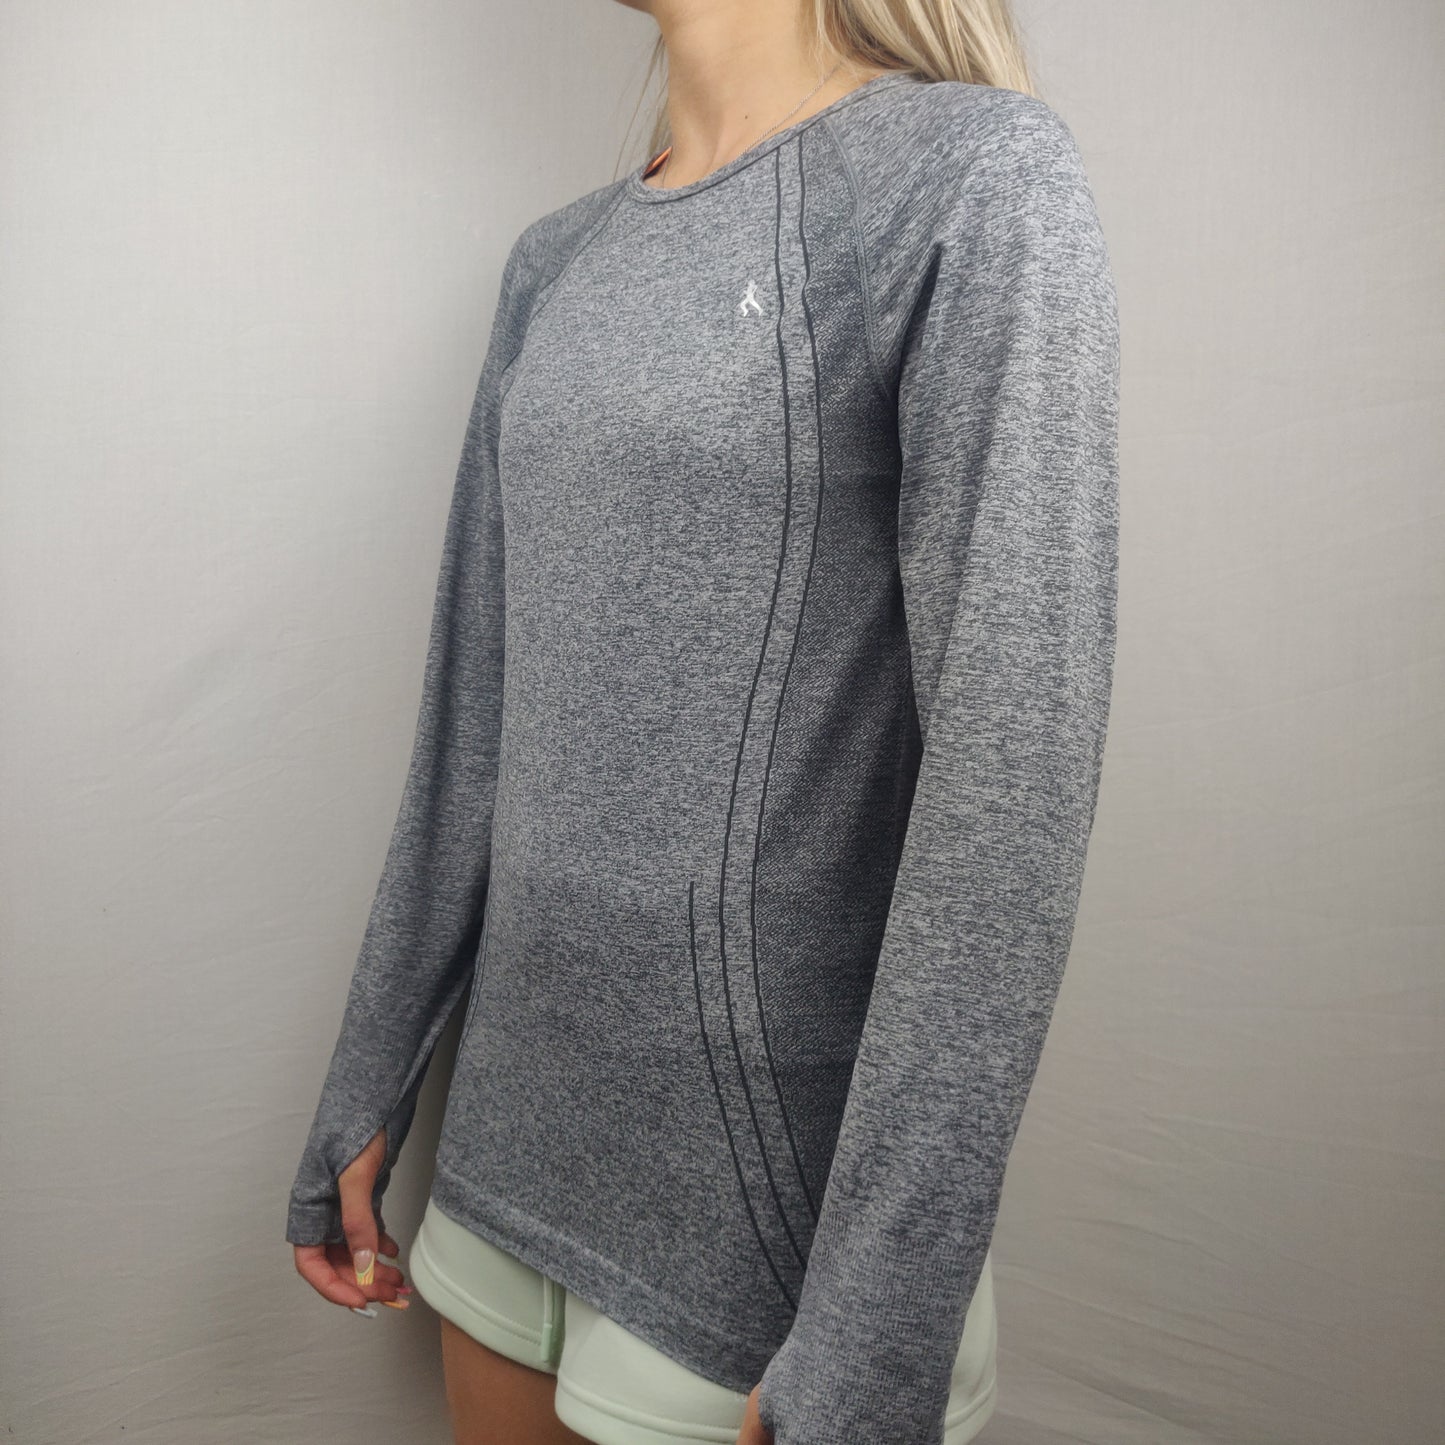 Workout By Atmosphere Grey Compression Sweatshirt Women Size UK 14-16